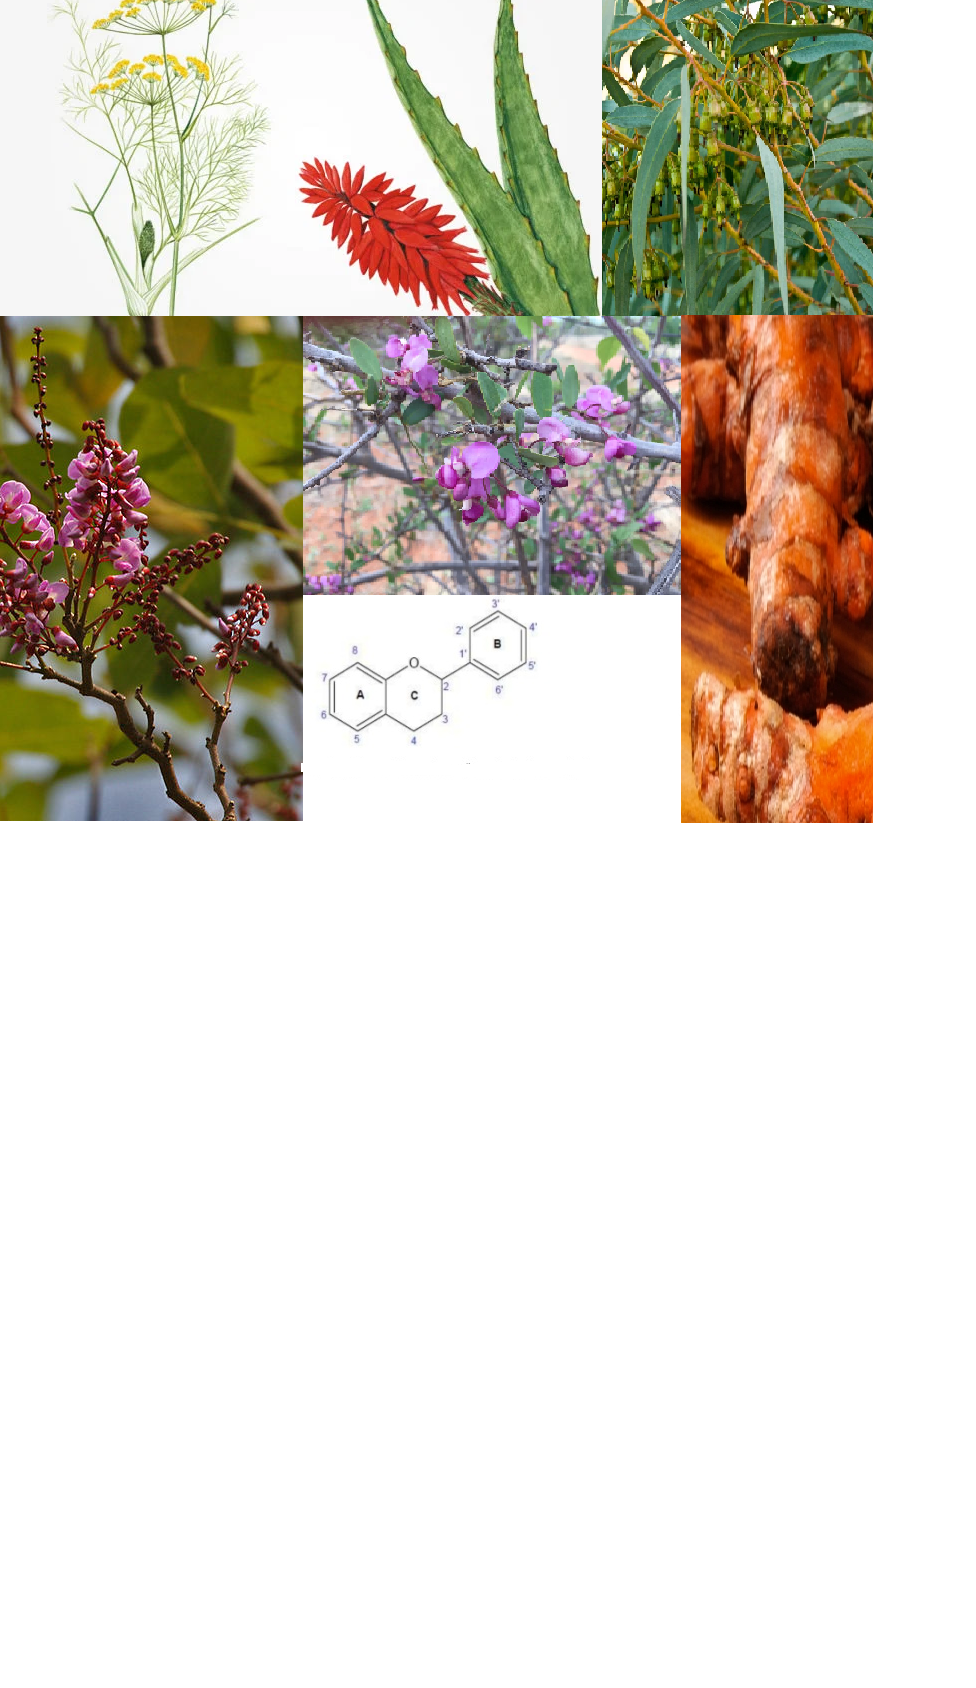 					Afficher Vol. 7 No fluxocontinuo (2021): Plantas Medicinais & Aromaterapia
				